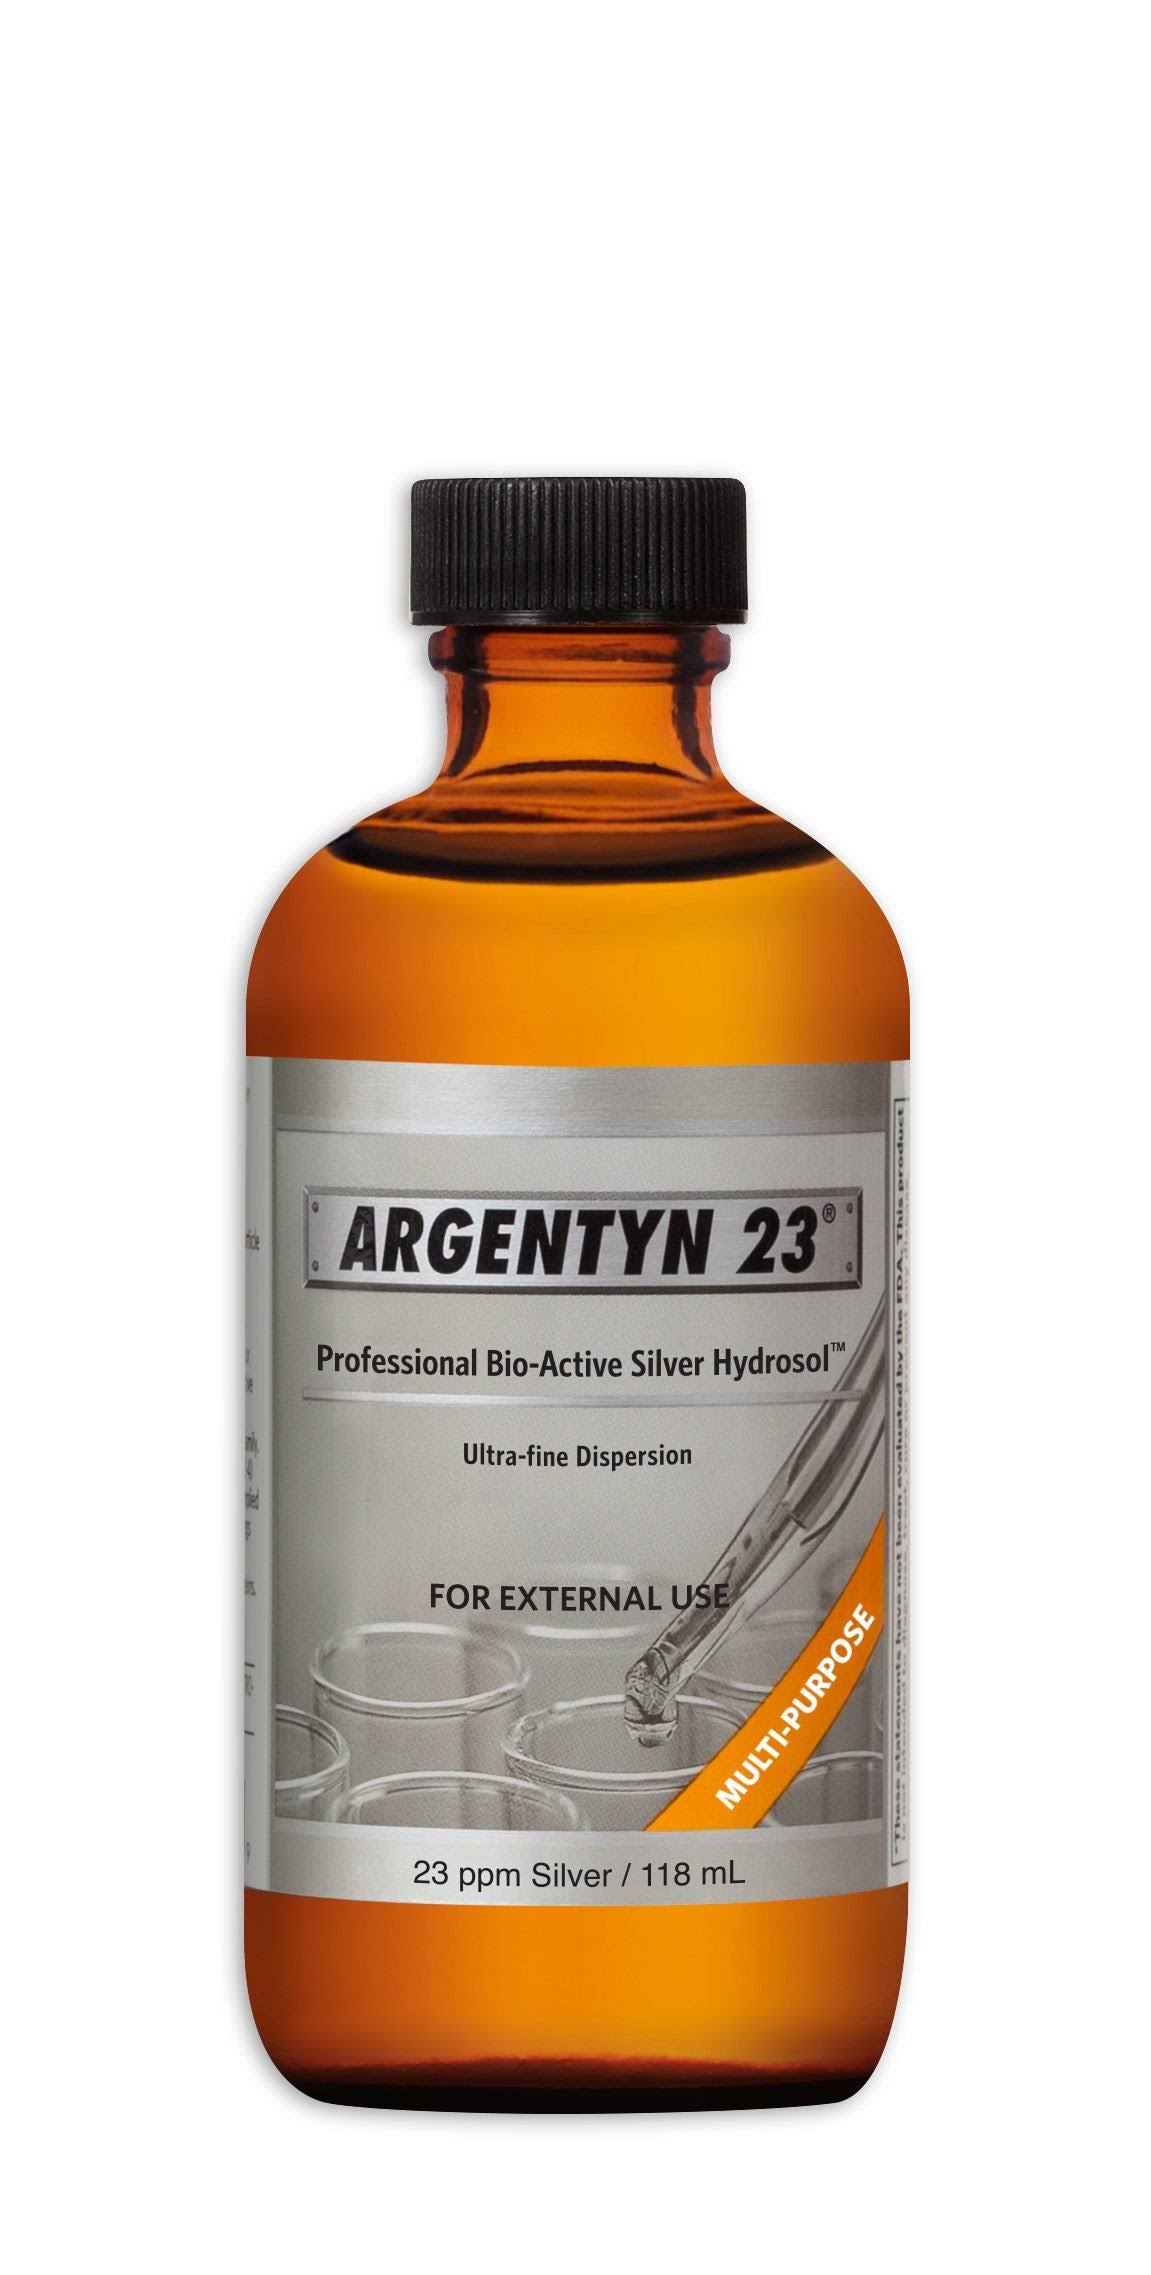 Natural Immunogenics Argentyn 23 Professional Bio-Active Silver Hydrosol Dietary Supplement - 23ppm